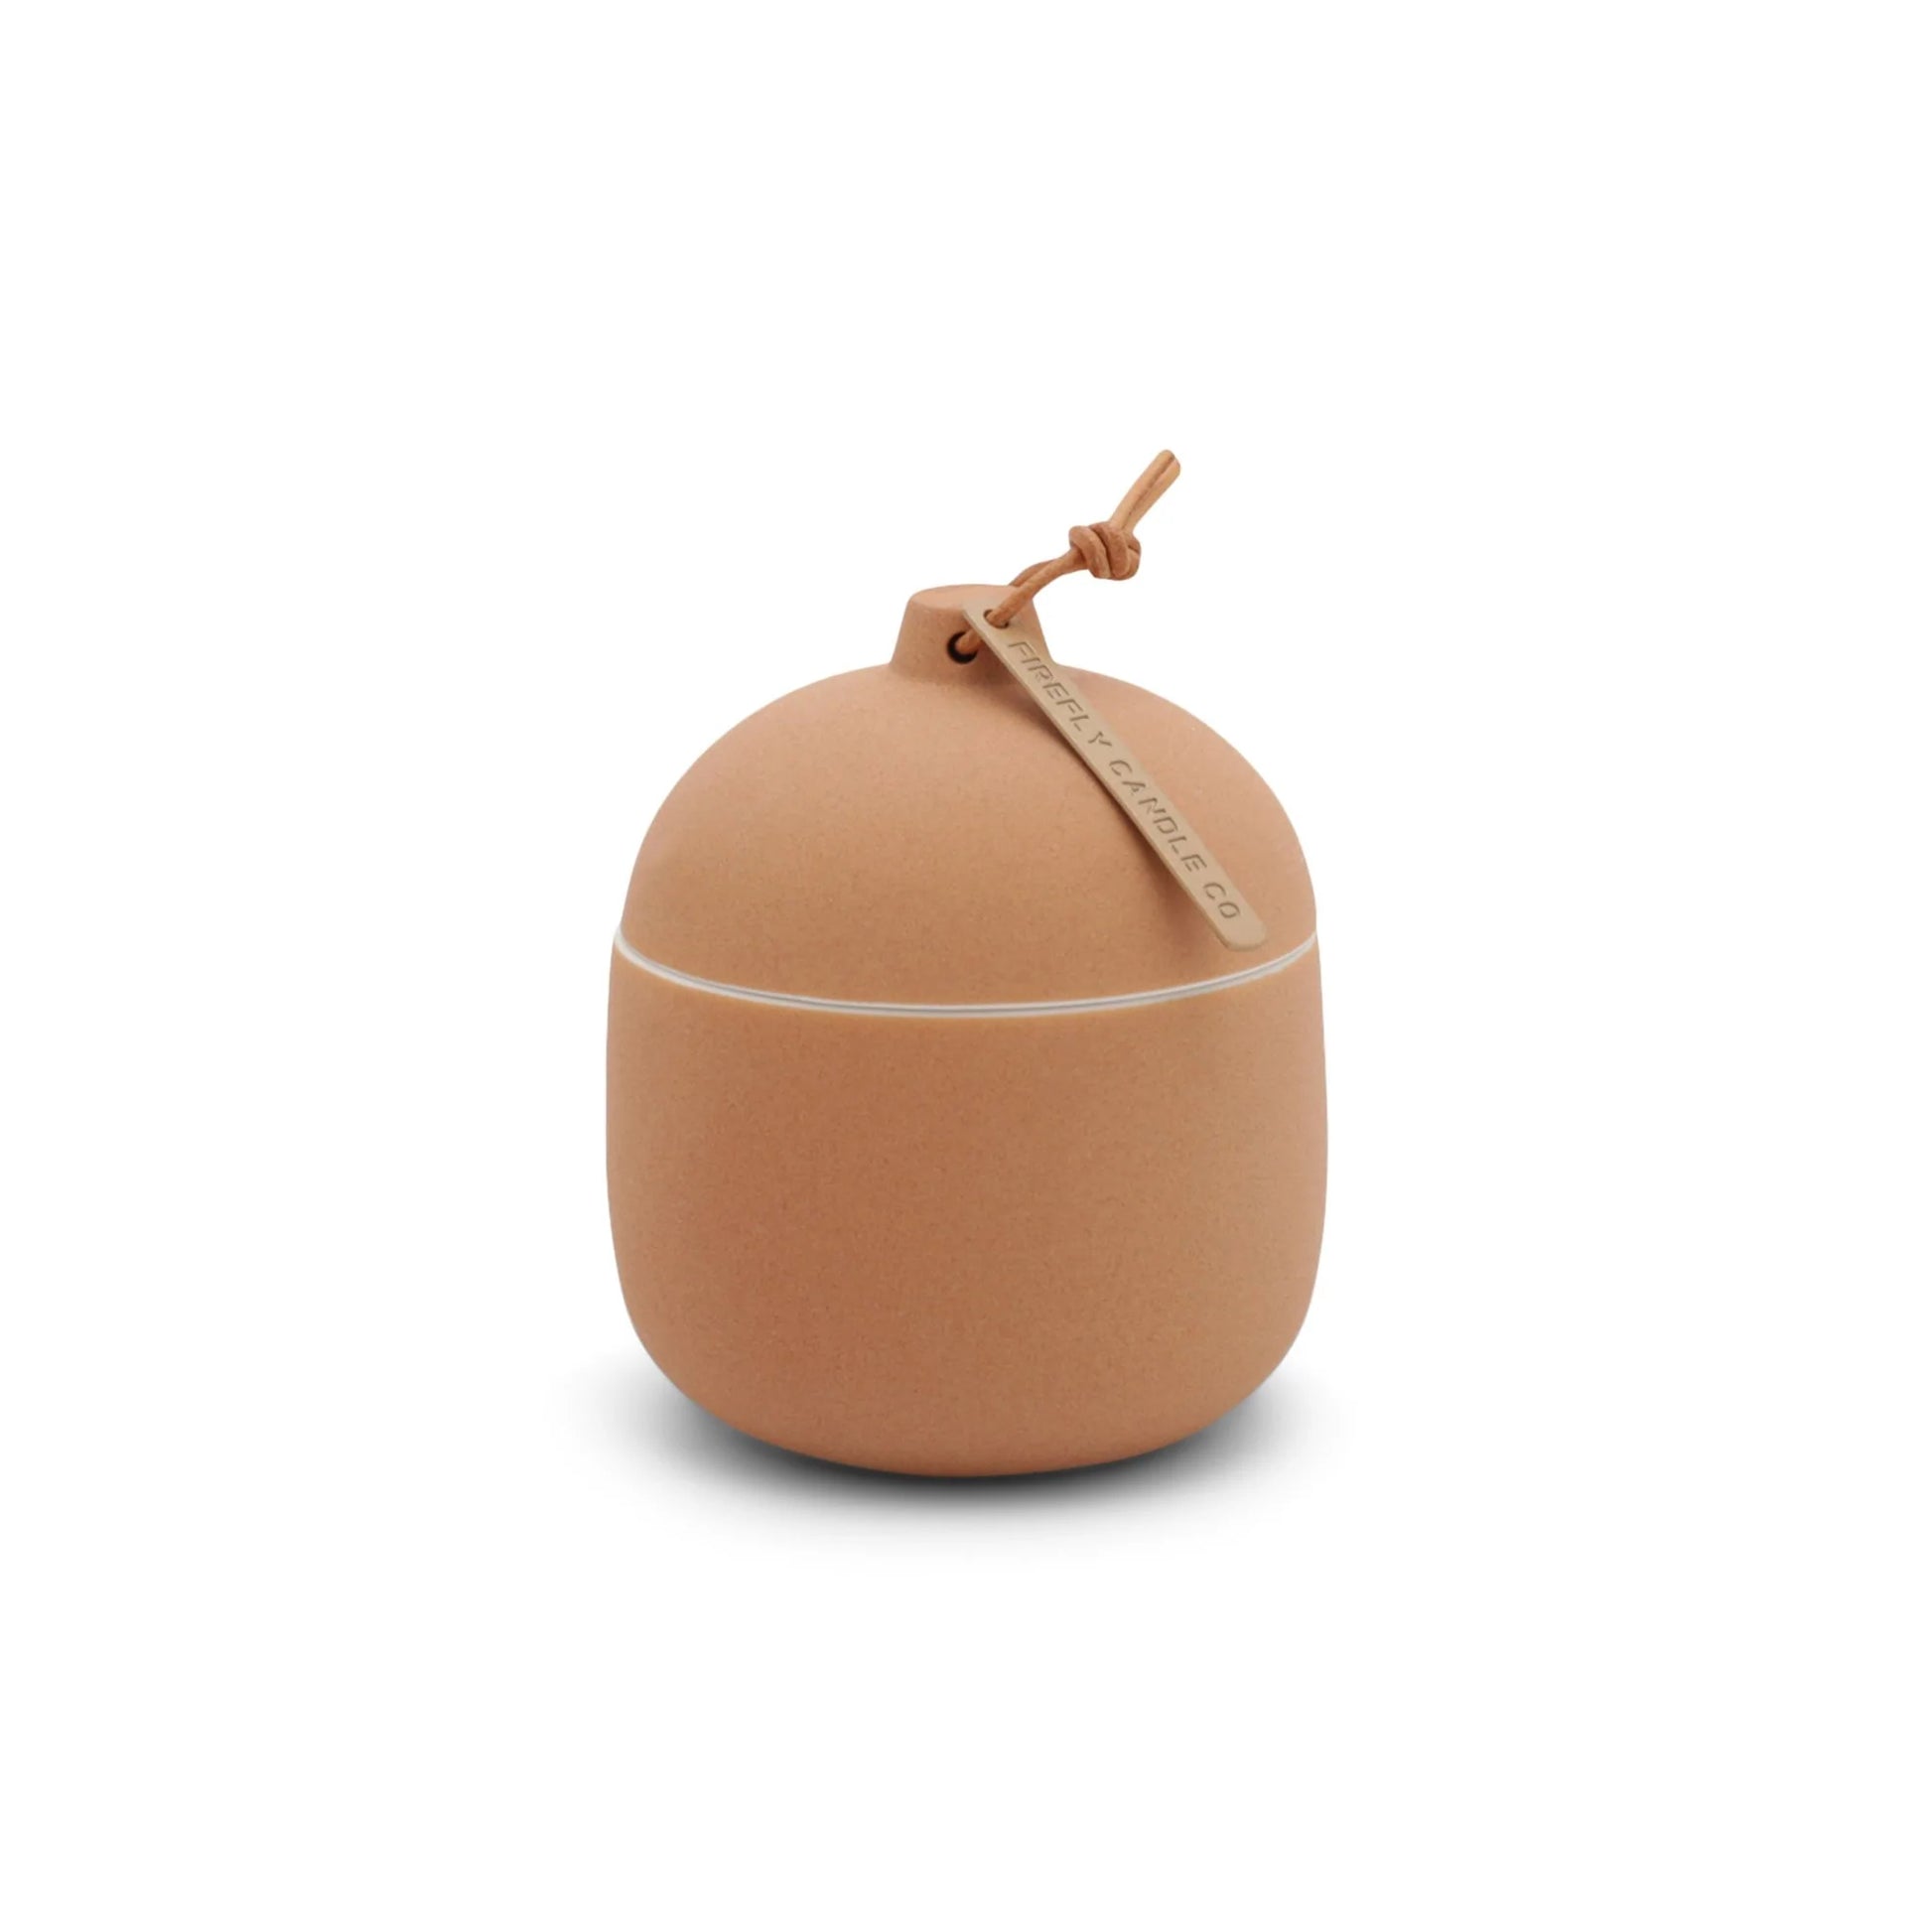 Keepsake 4 oz Candle - Amber Woods - orange colored clay vessel